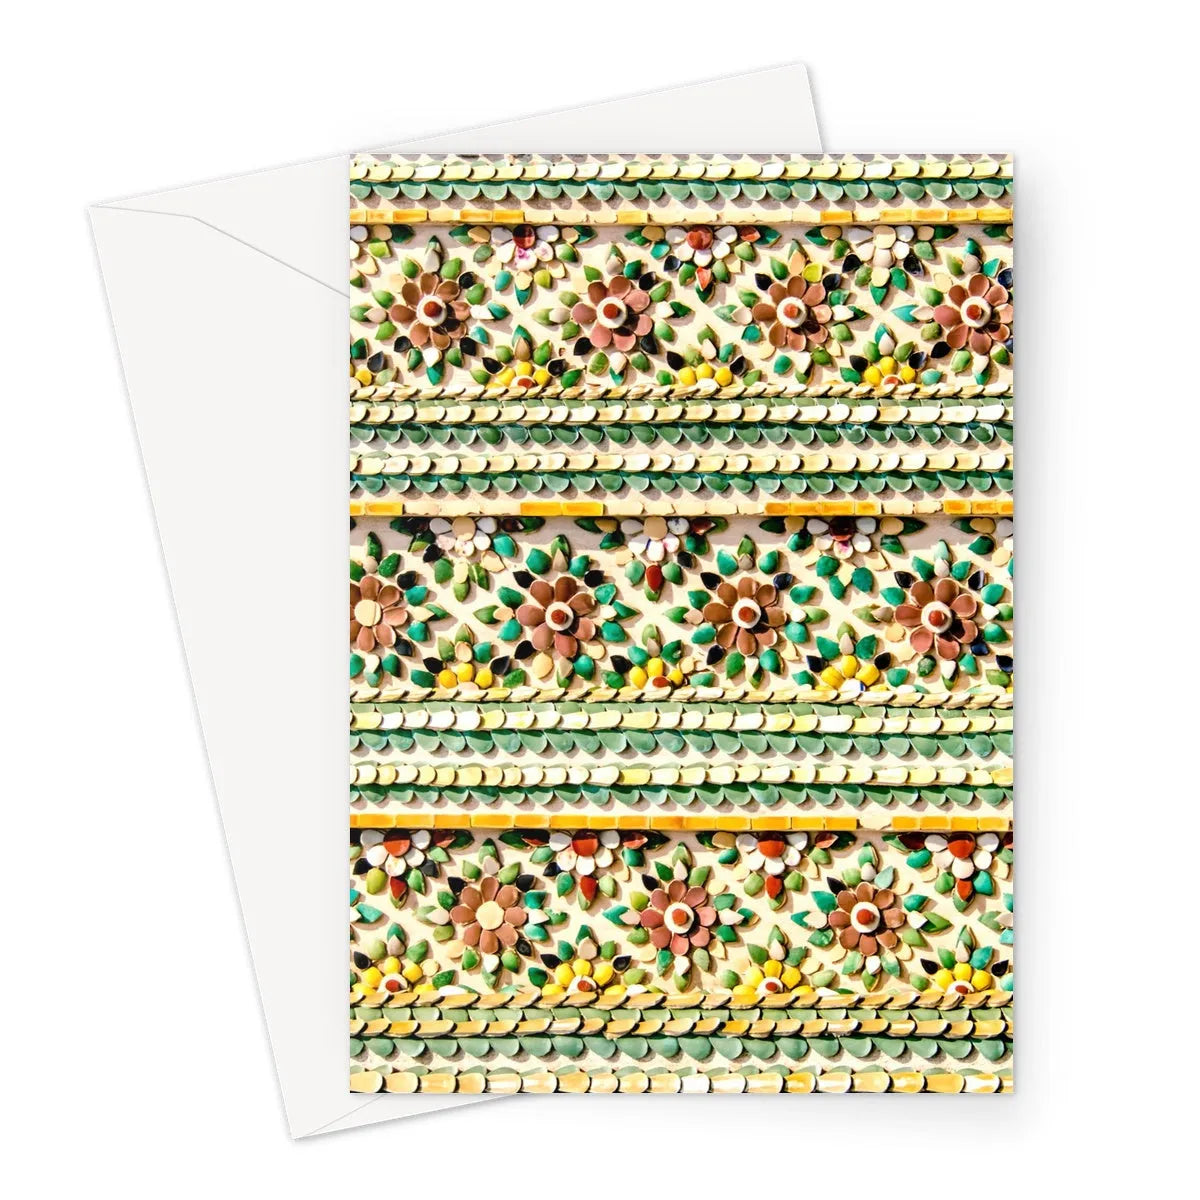 Flower Beds Greeting Card - A5 Portrait / 1 Card - Notebooks & Notepads - Aesthetic Art